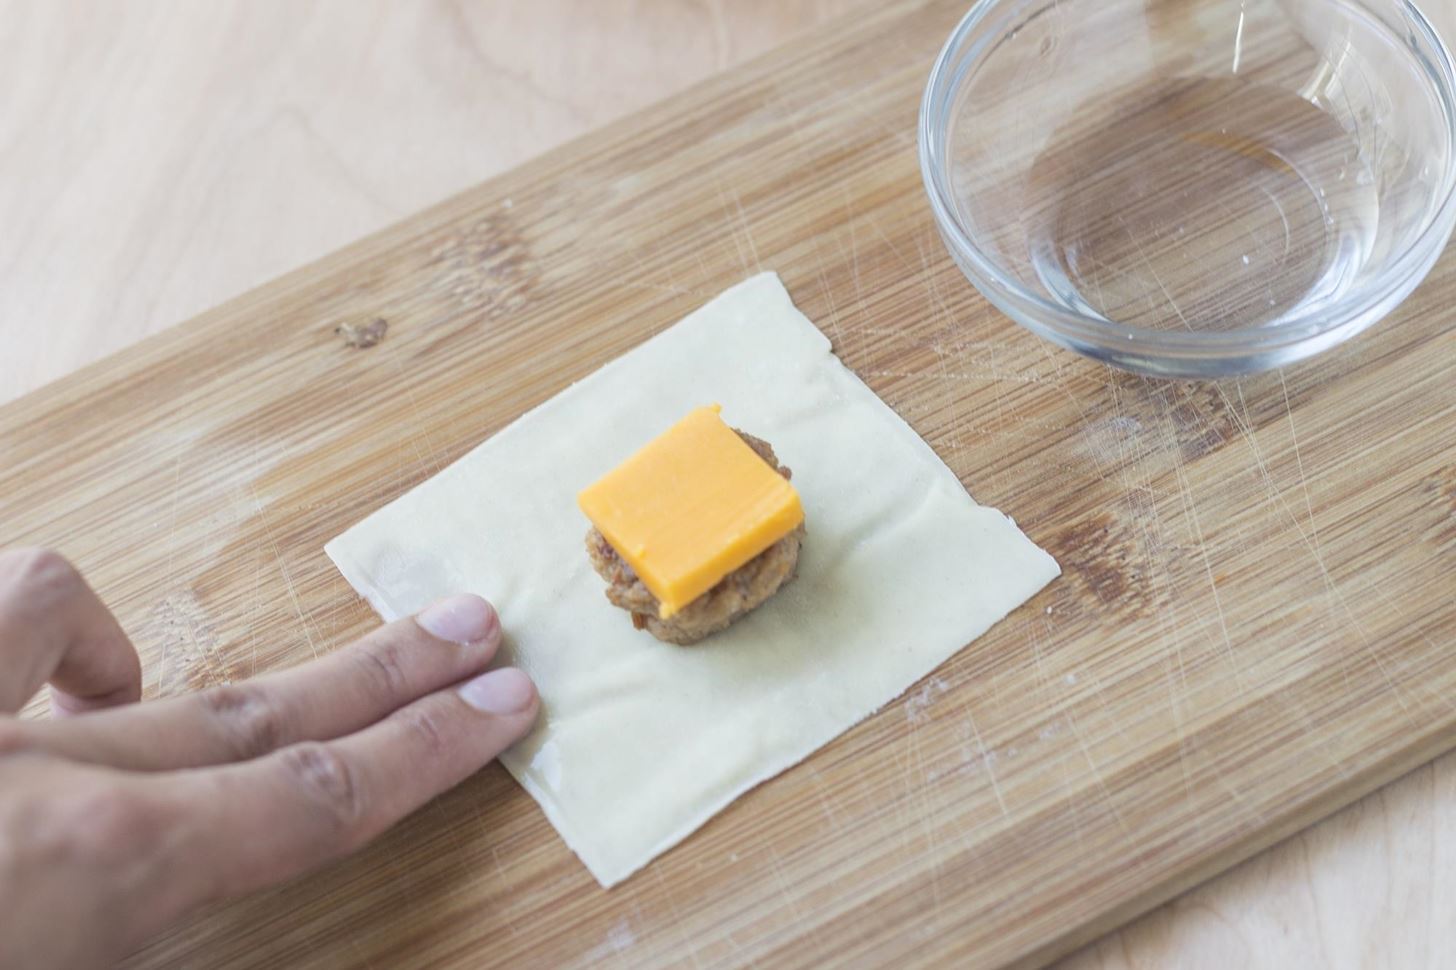 Get Creative: Make Dumplings with Cheeseburgers & Kielbasa